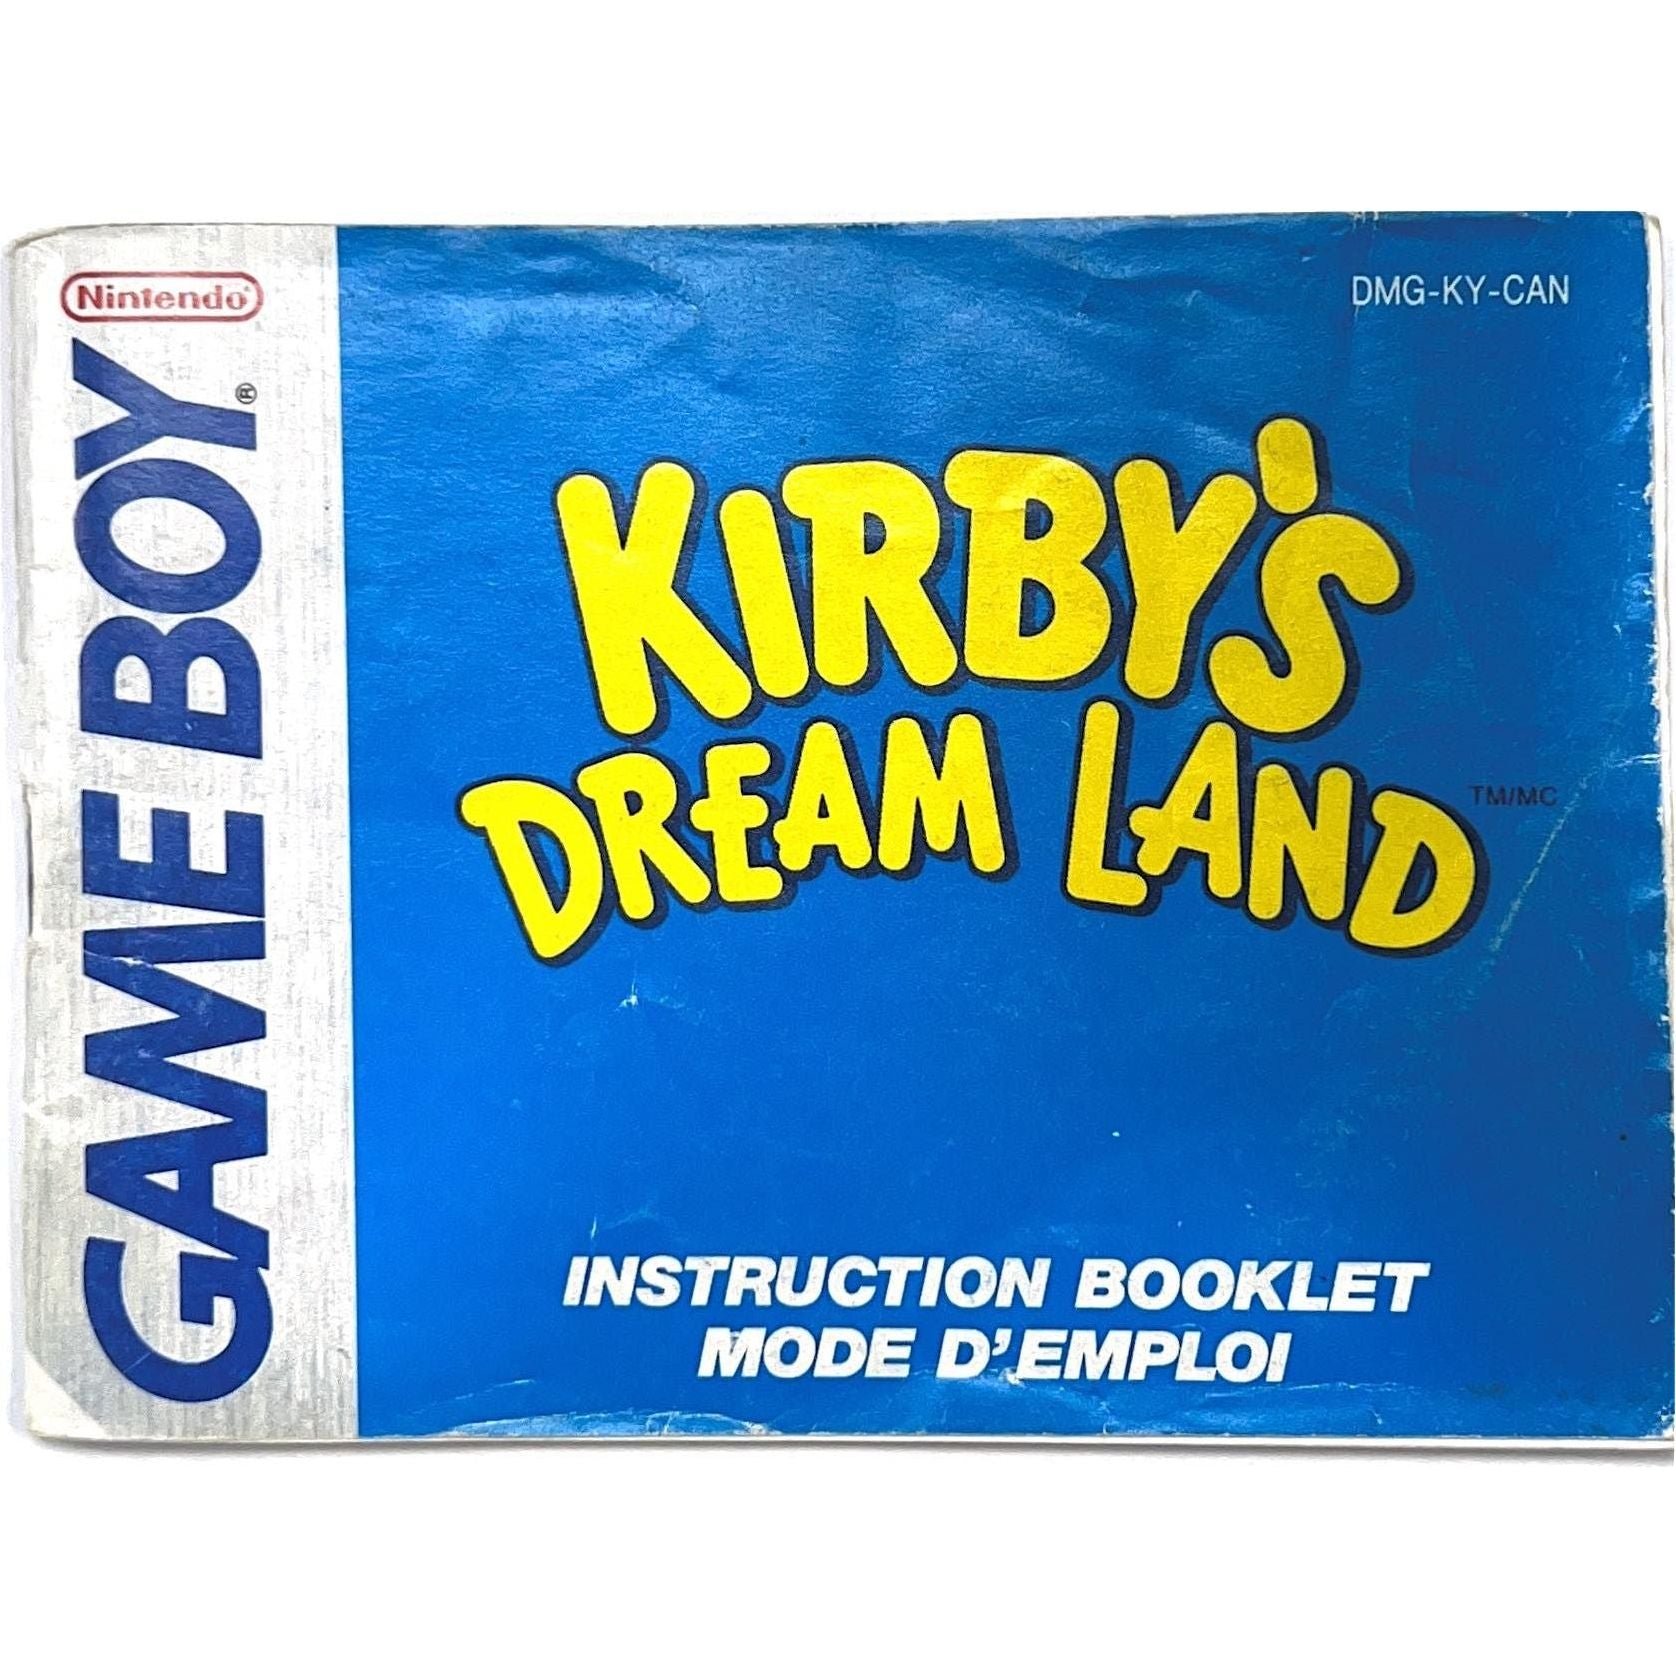 GB - Kirby's Dream Land (Manual)